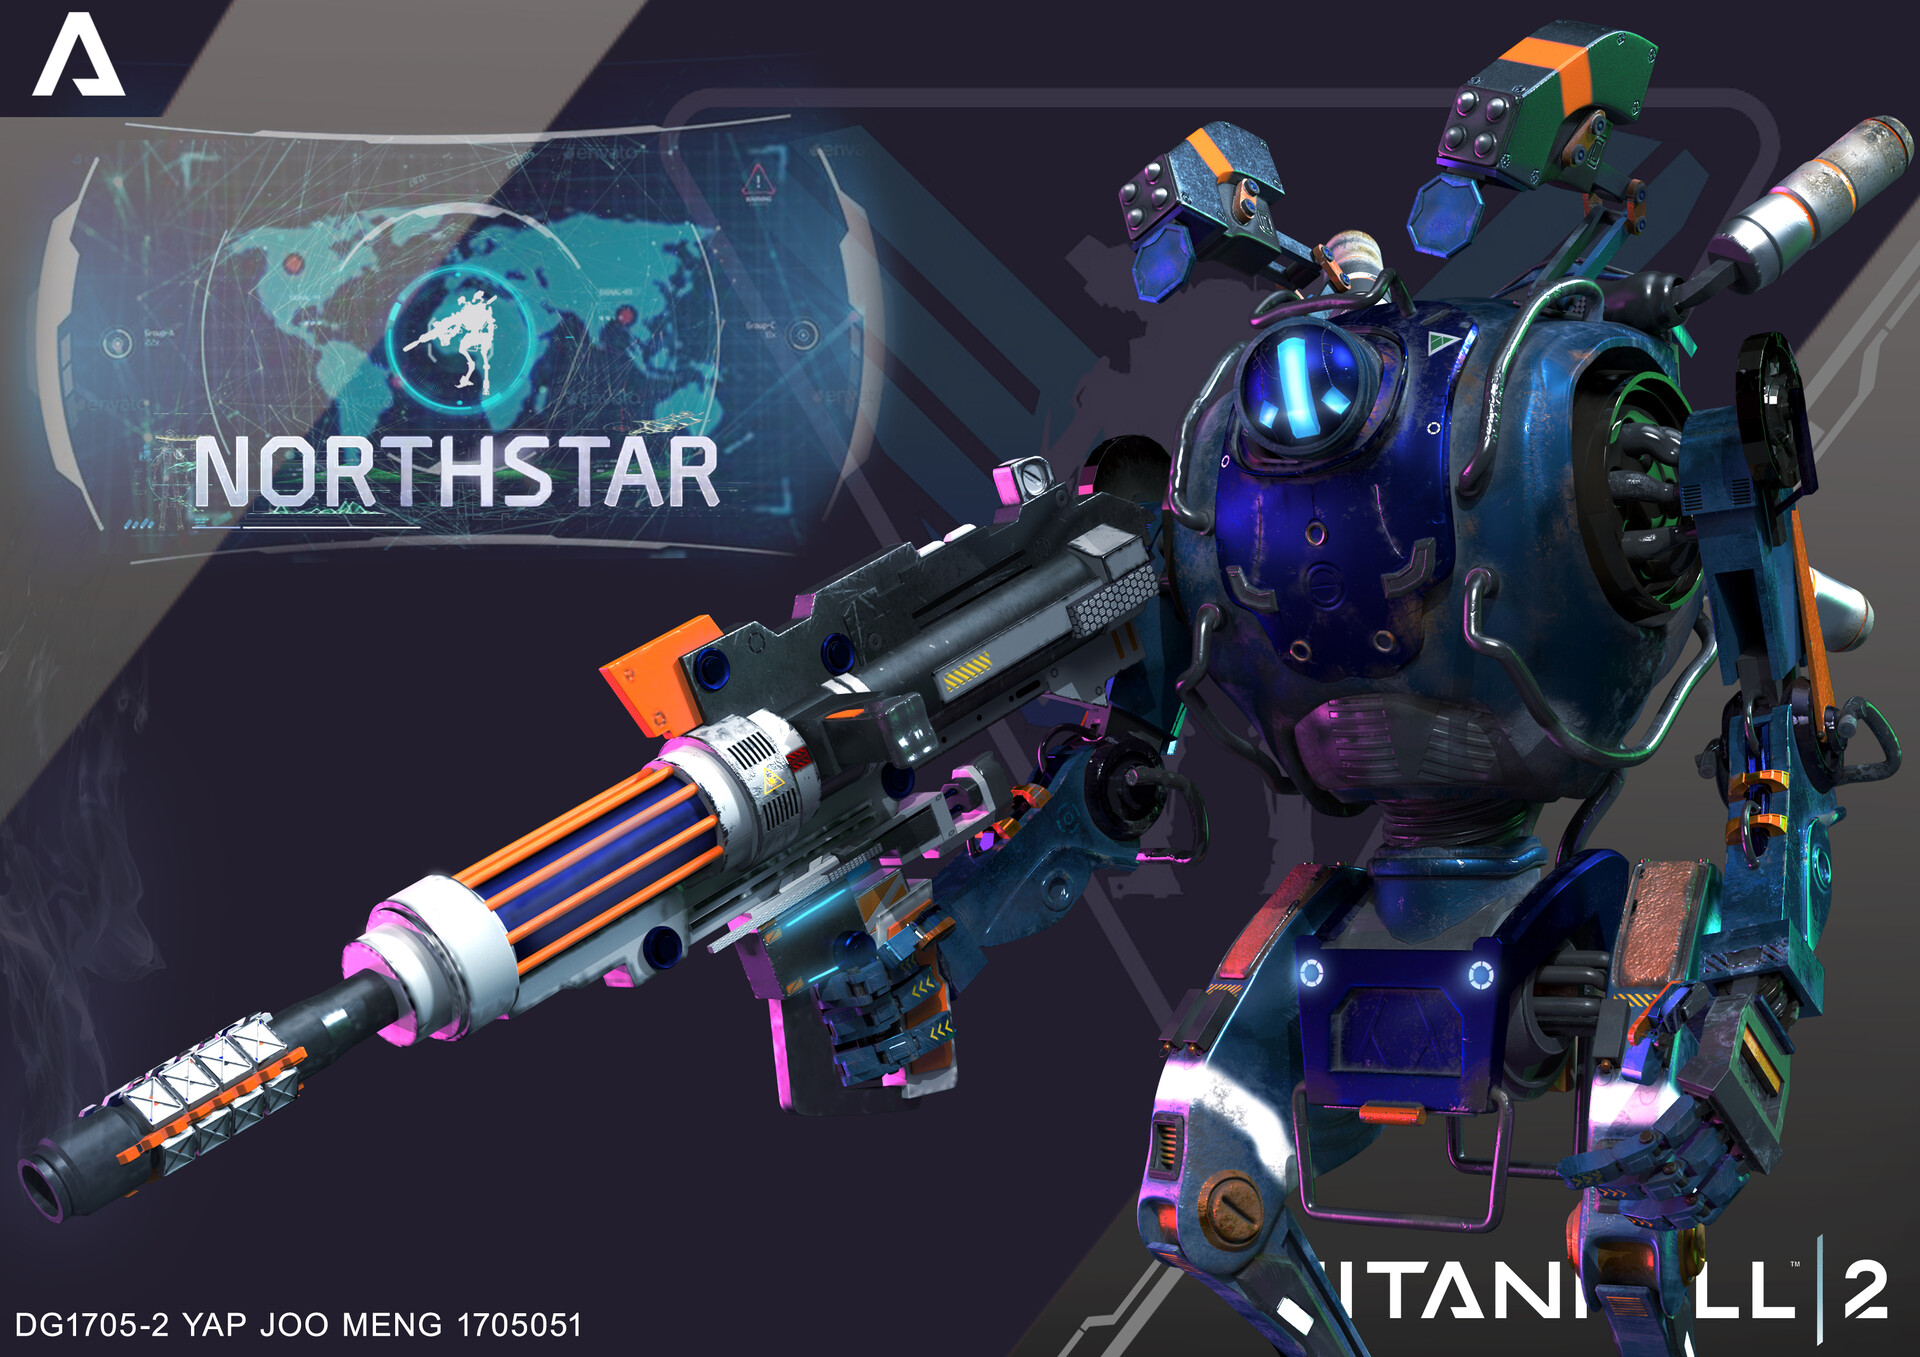 Yap Joo Meng - Titanfall 2 Northstar